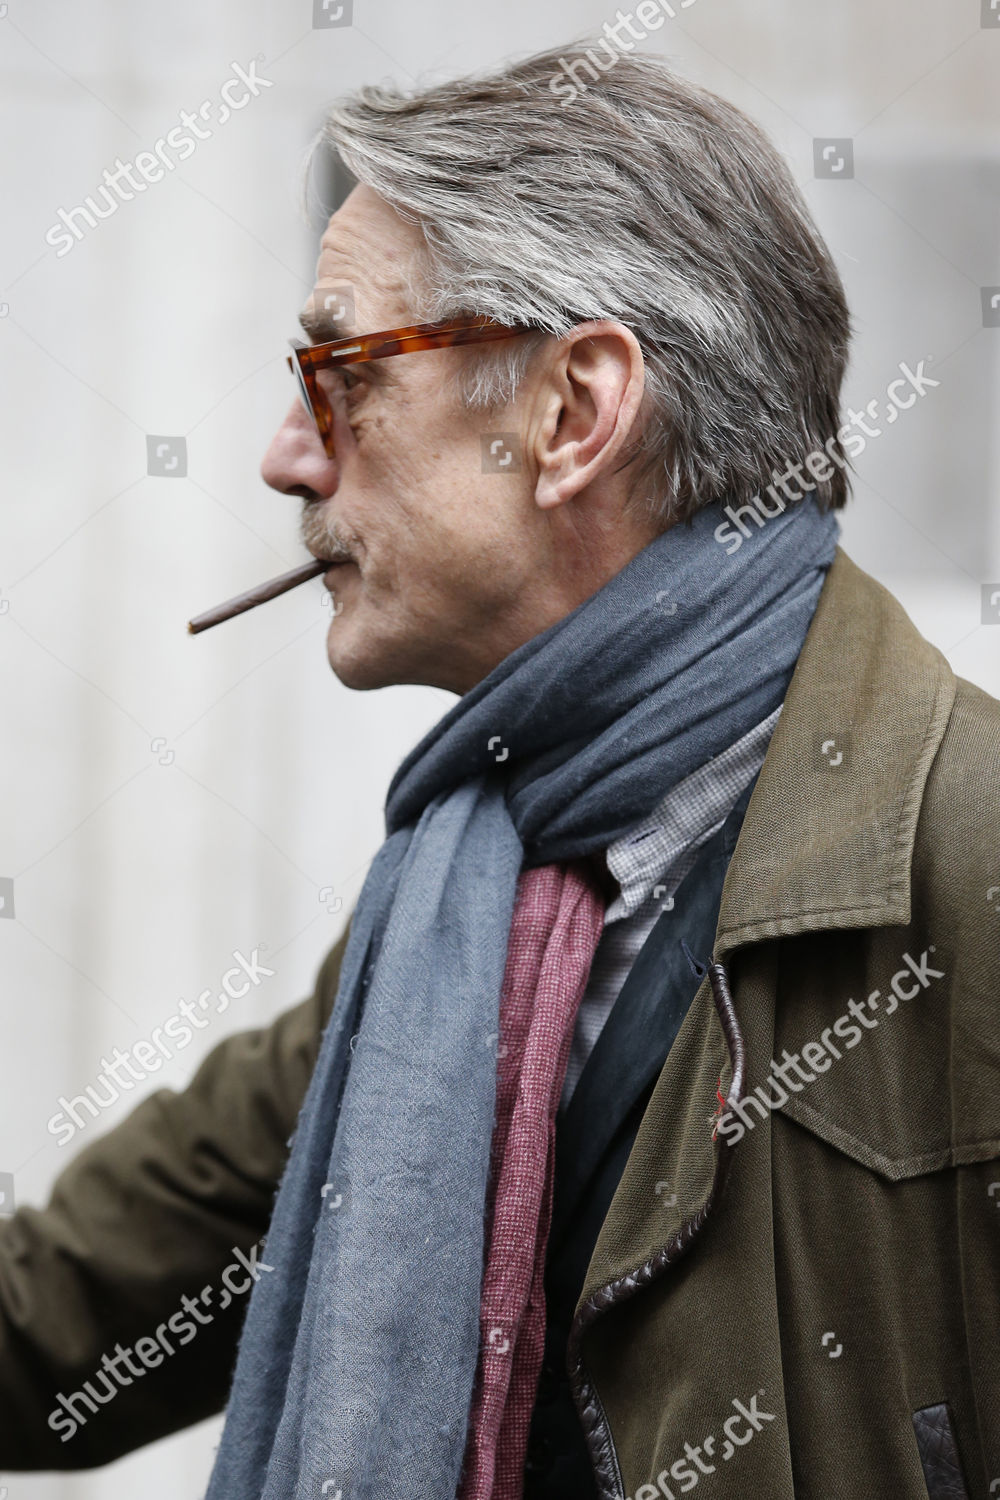 Jeremy Irons pali papierosa (lub trawkę)
